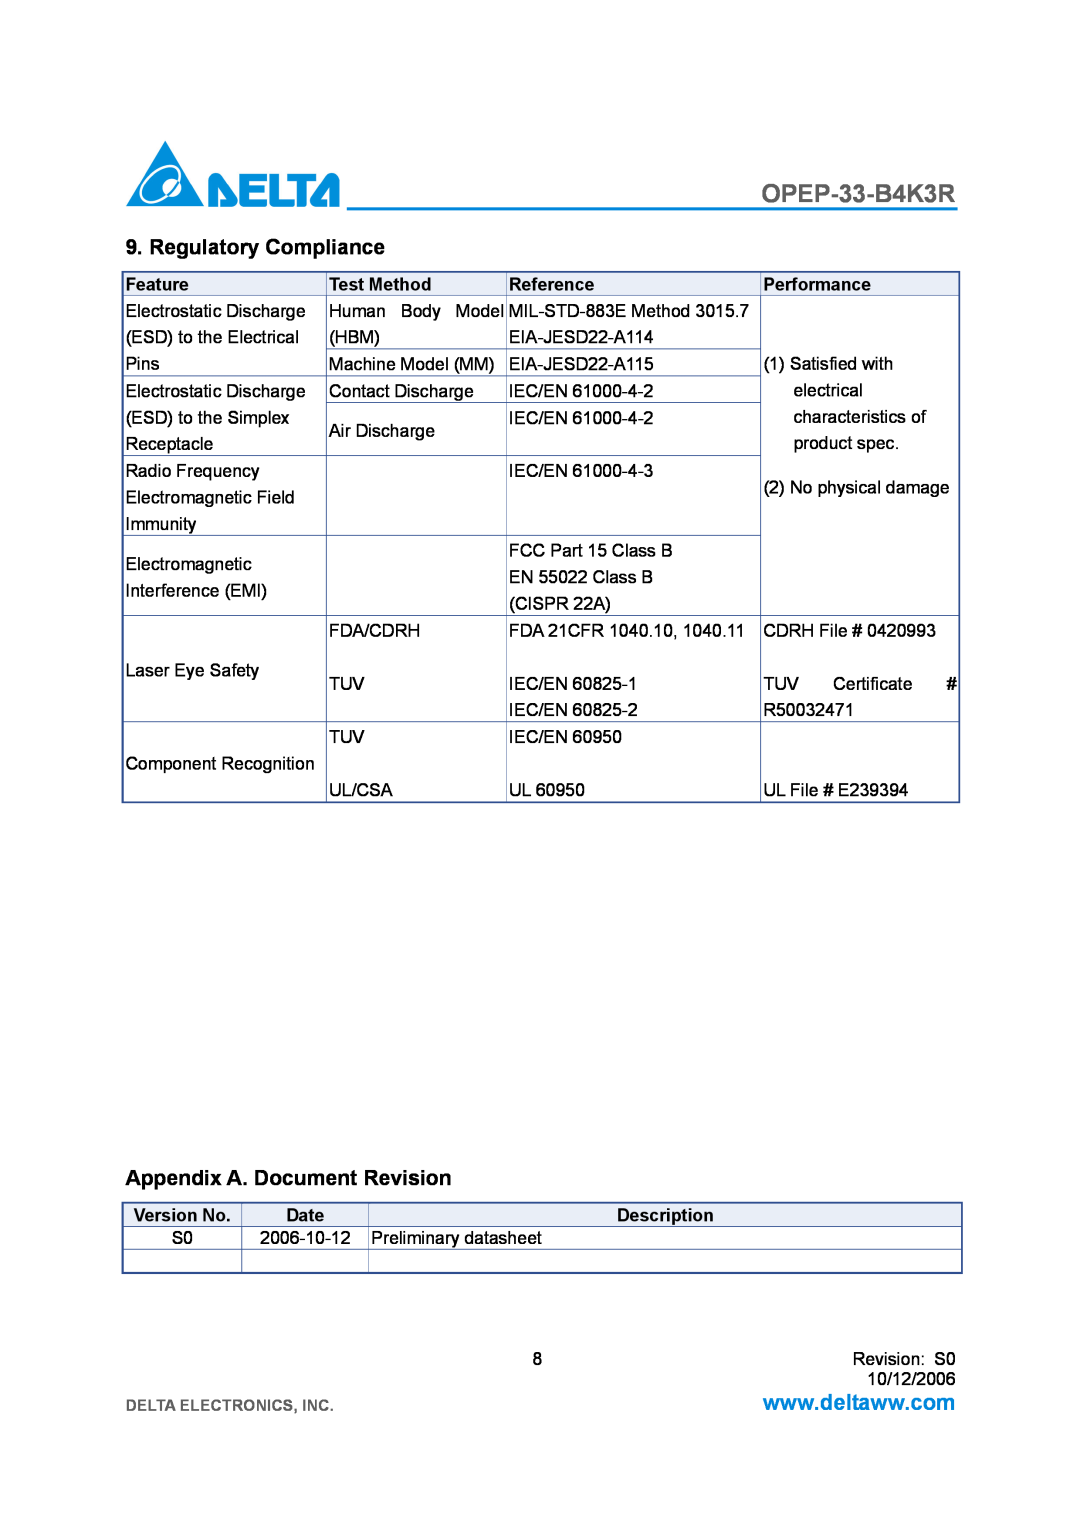 Delta Electronics OPEP-33-B4K3R manual Regulatory Compliance, Appendix A. Document Revision 